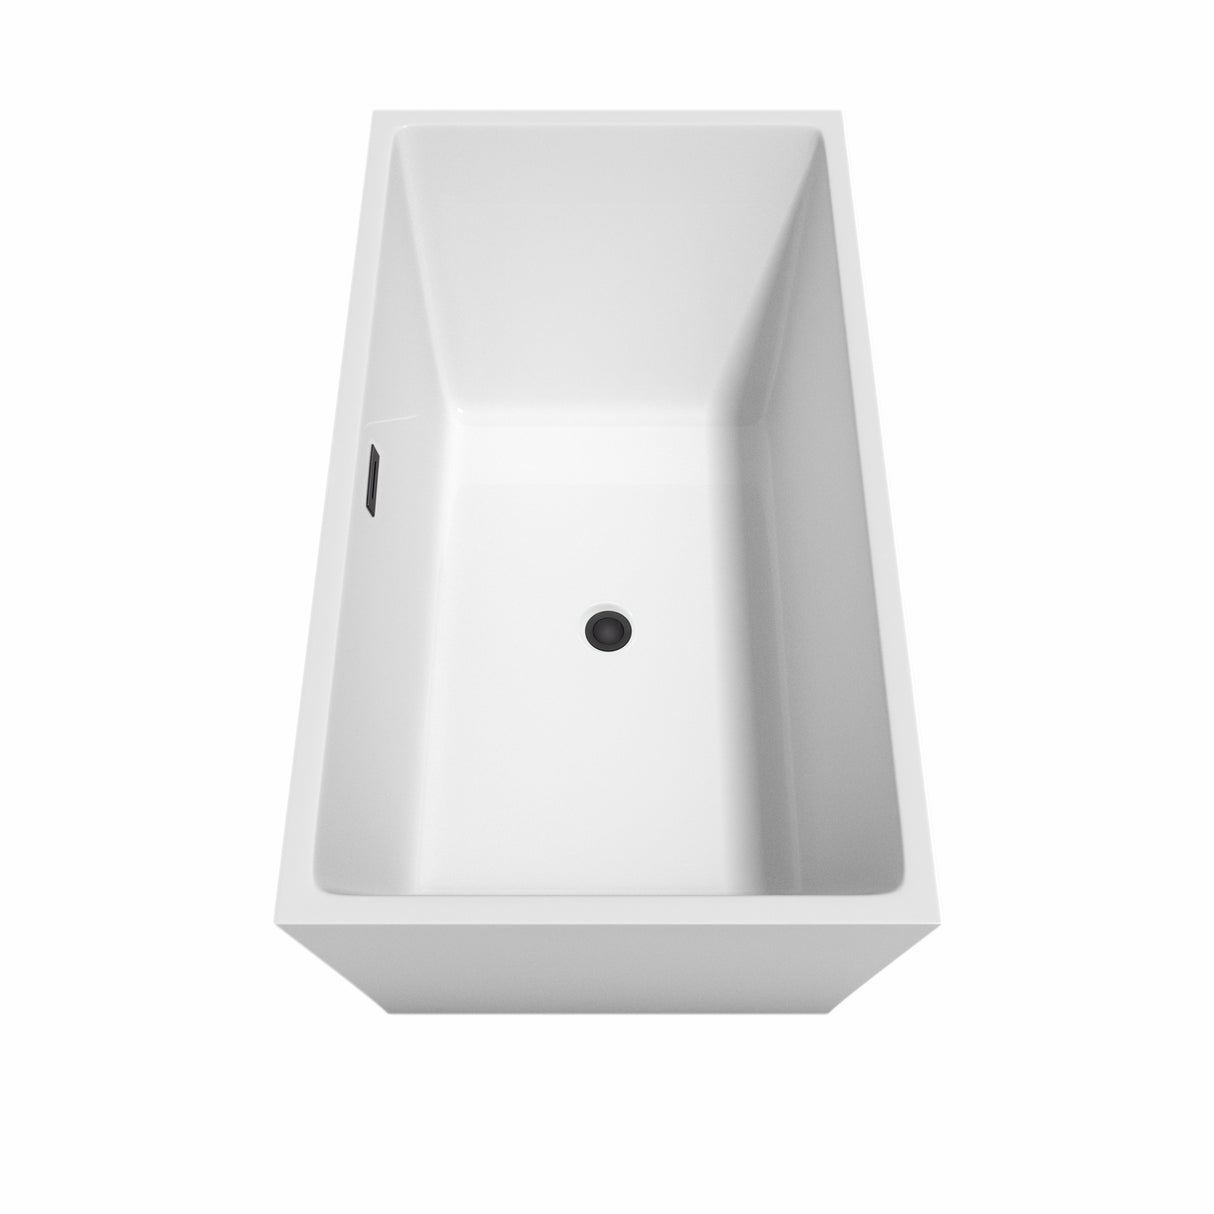 Sara 59 Inch Freestanding Bathtub in White with Matte Black Drain and Overflow Trim